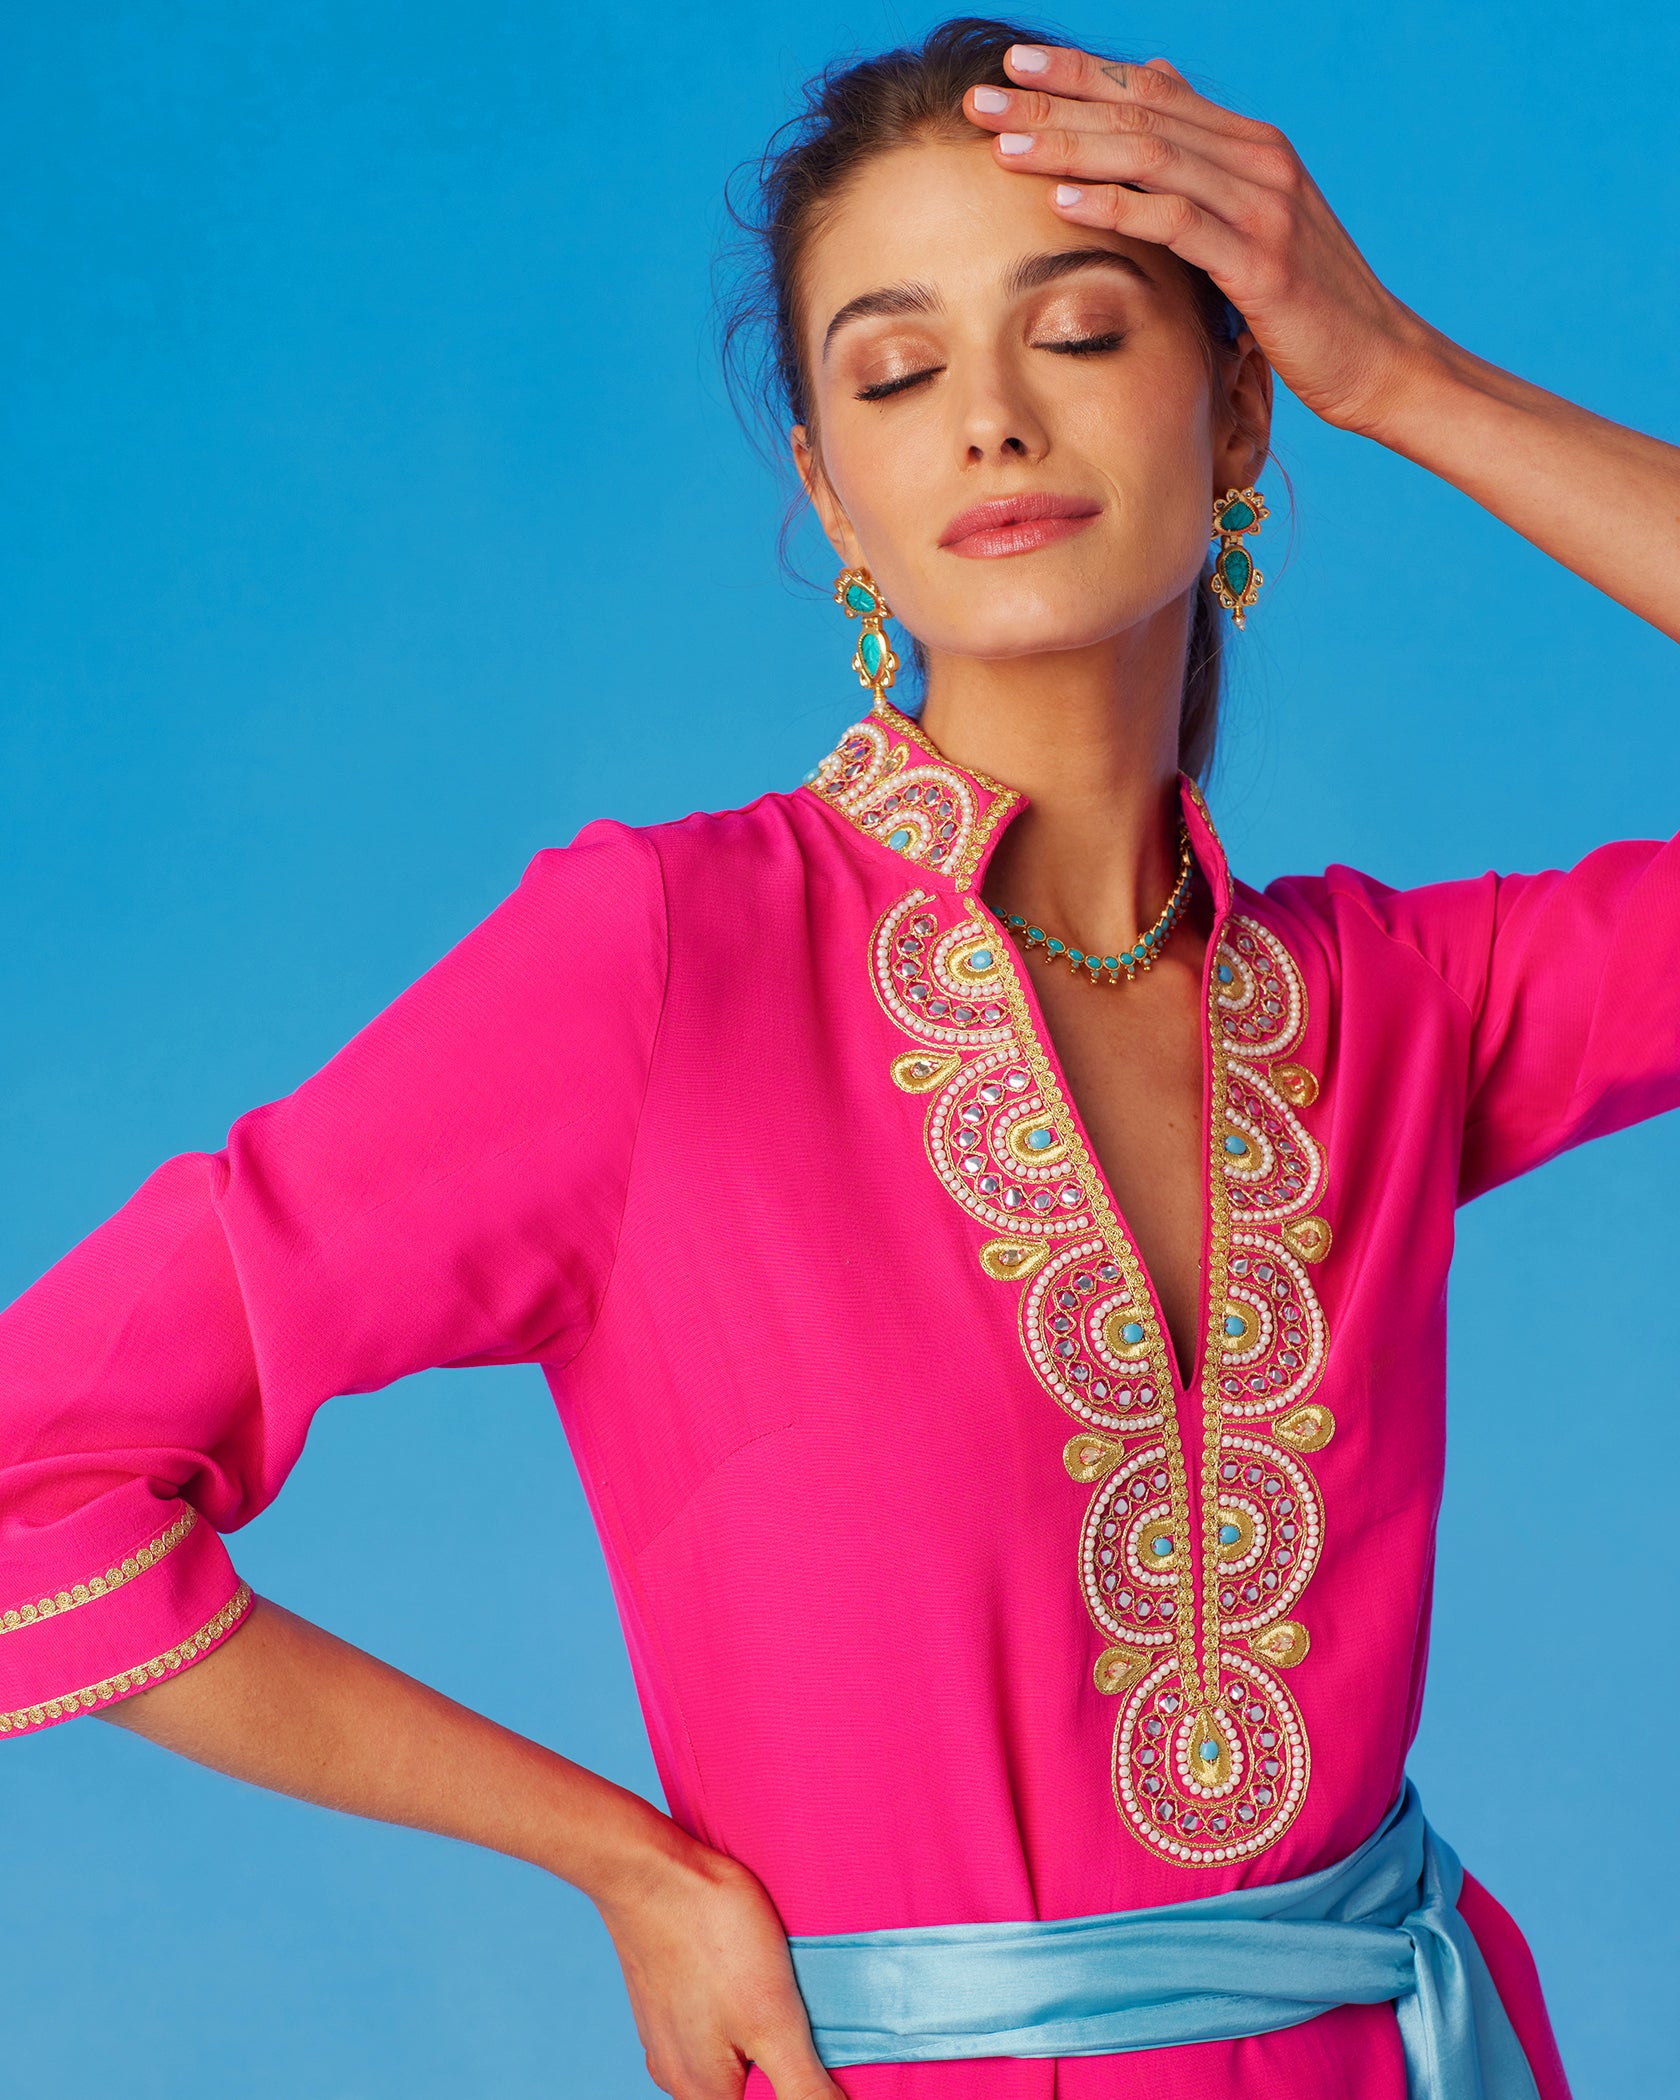 Noor Long Hot Pink Tunic Dress with Gold Embellishment-Closeup